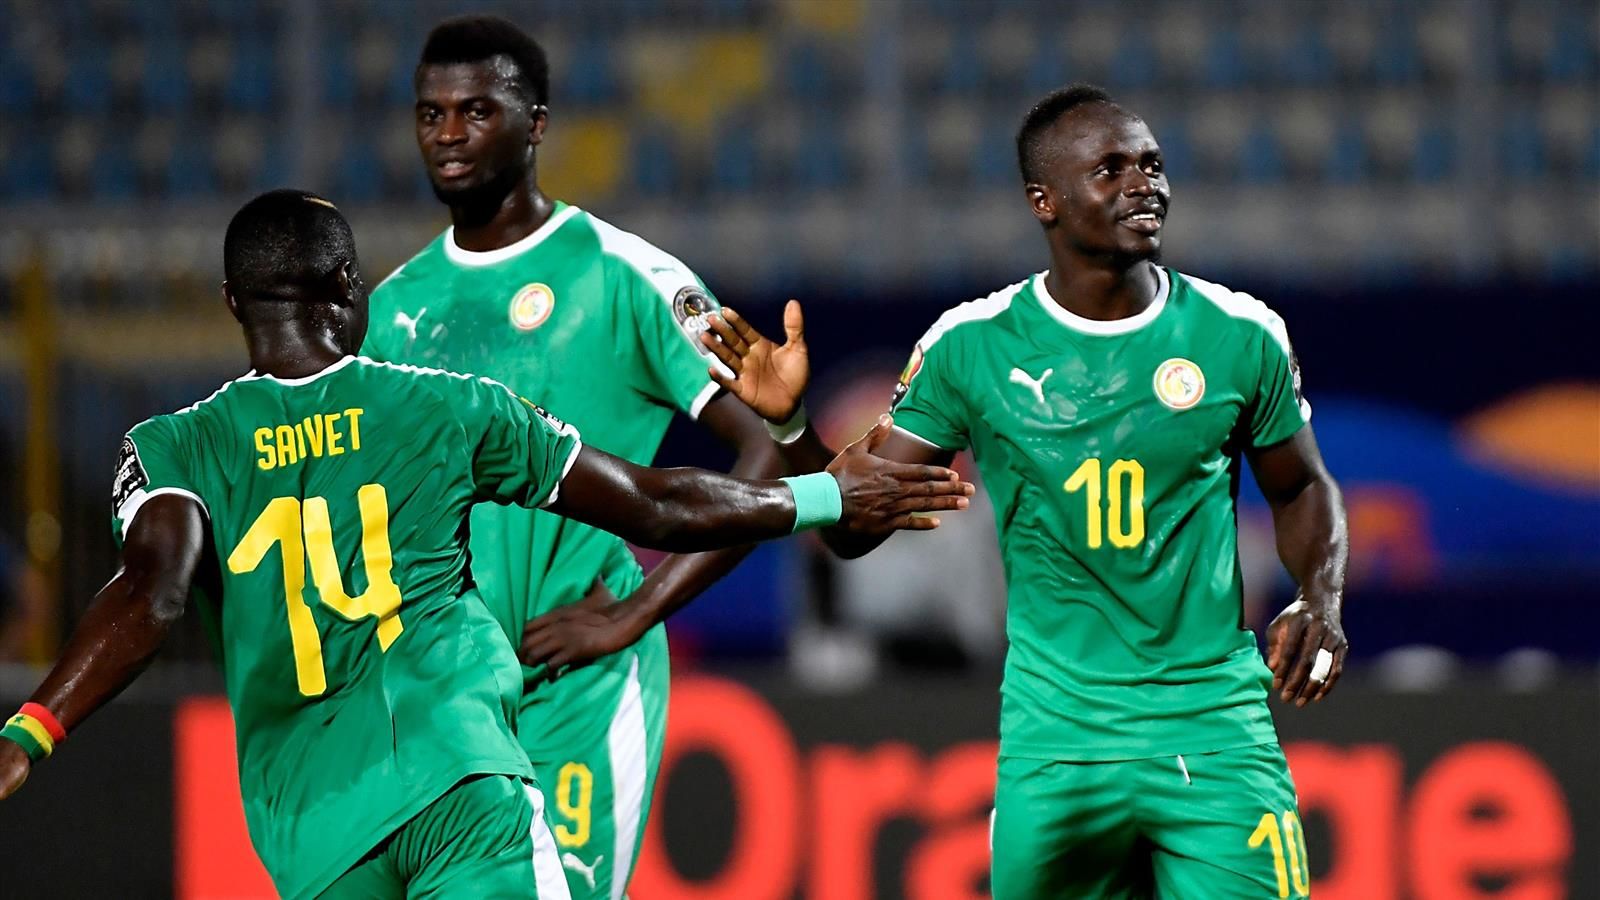 Soi kèo, nhận định Uganda vs Senegal 02h00 ngày 06/07/2019